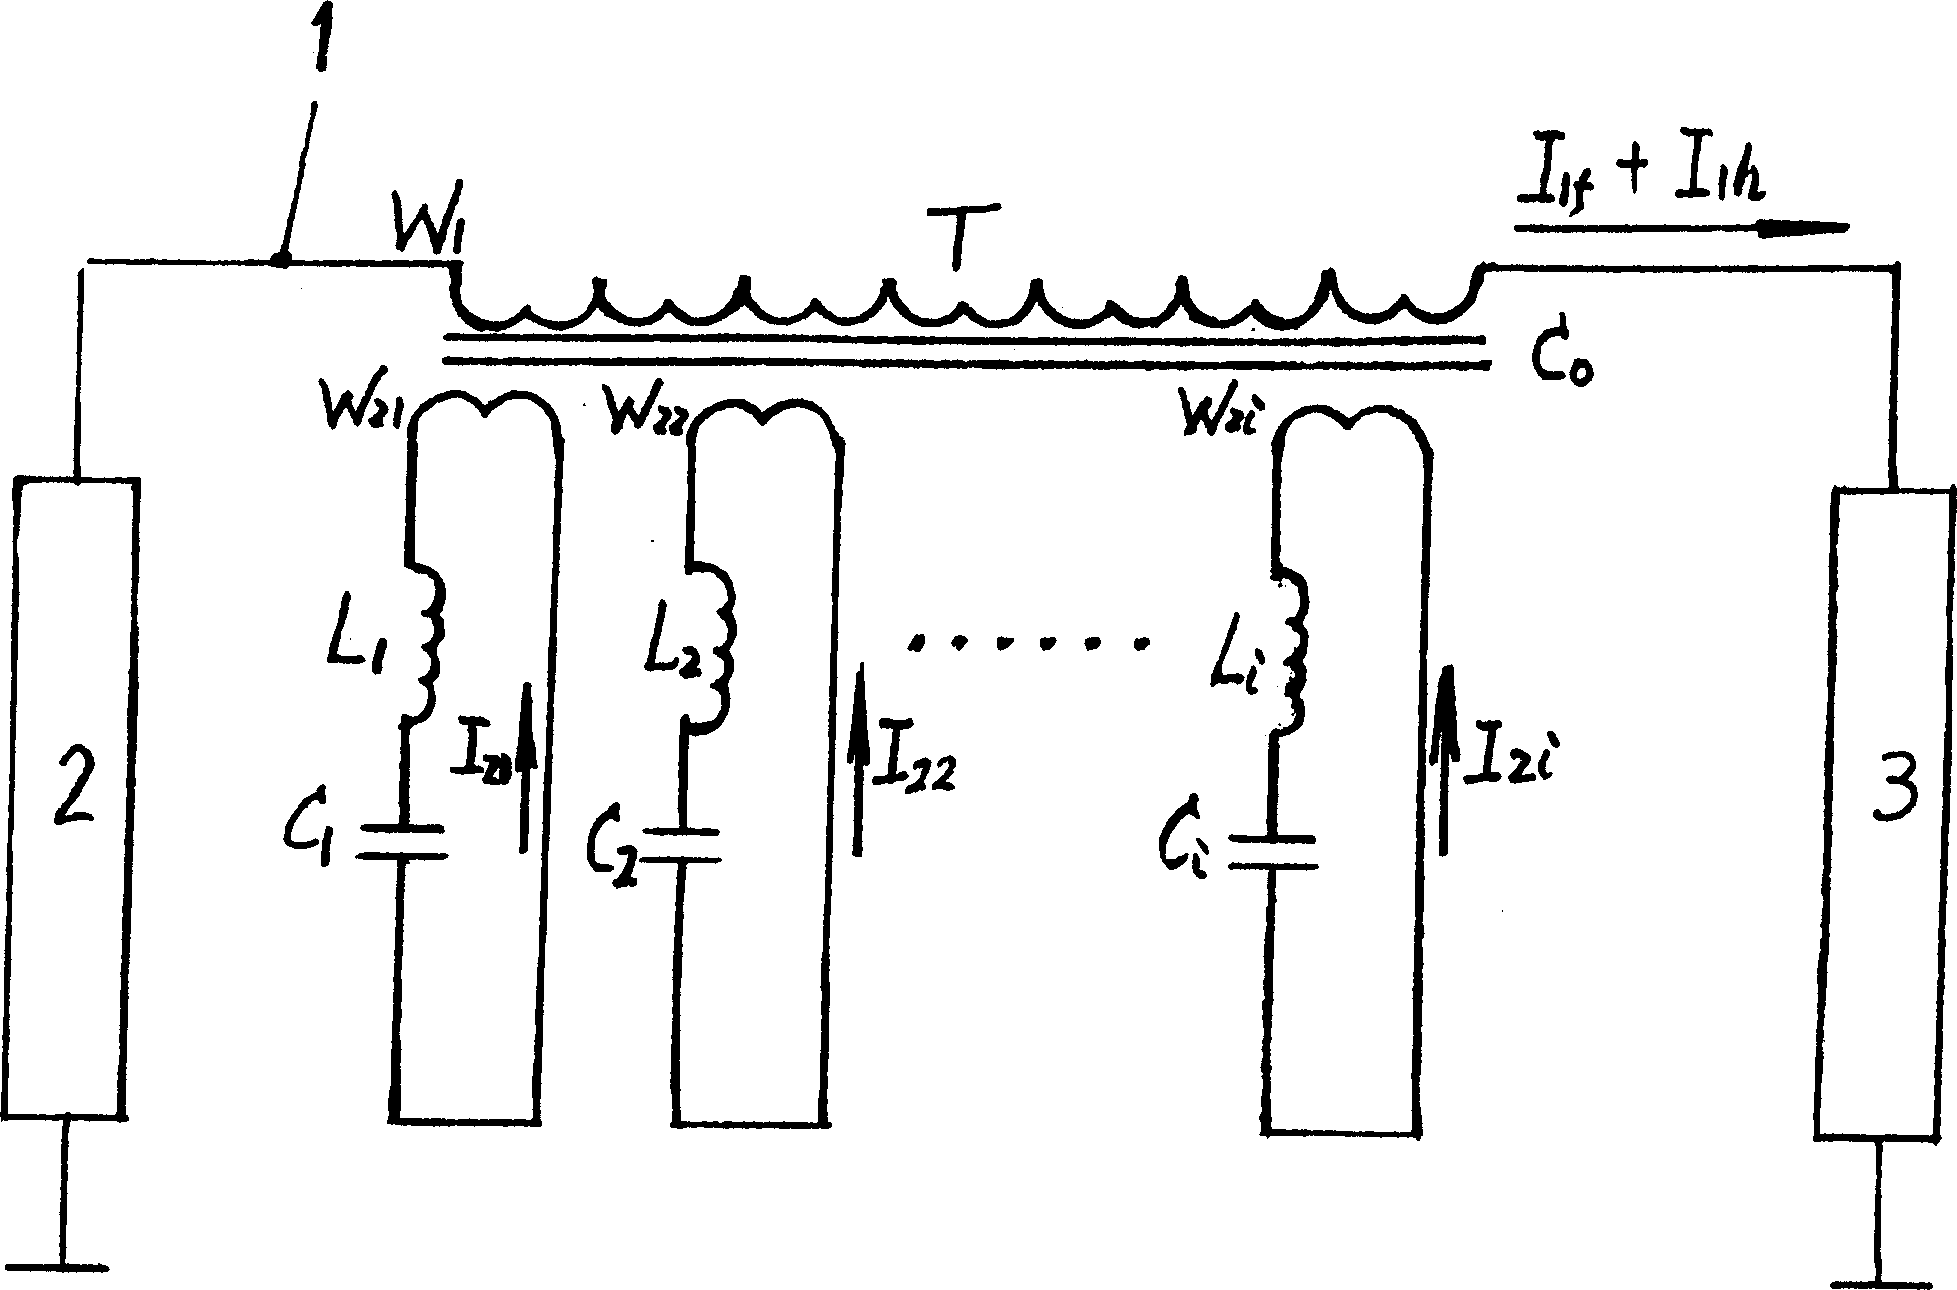 Multi-channel harmonic wave restraining device